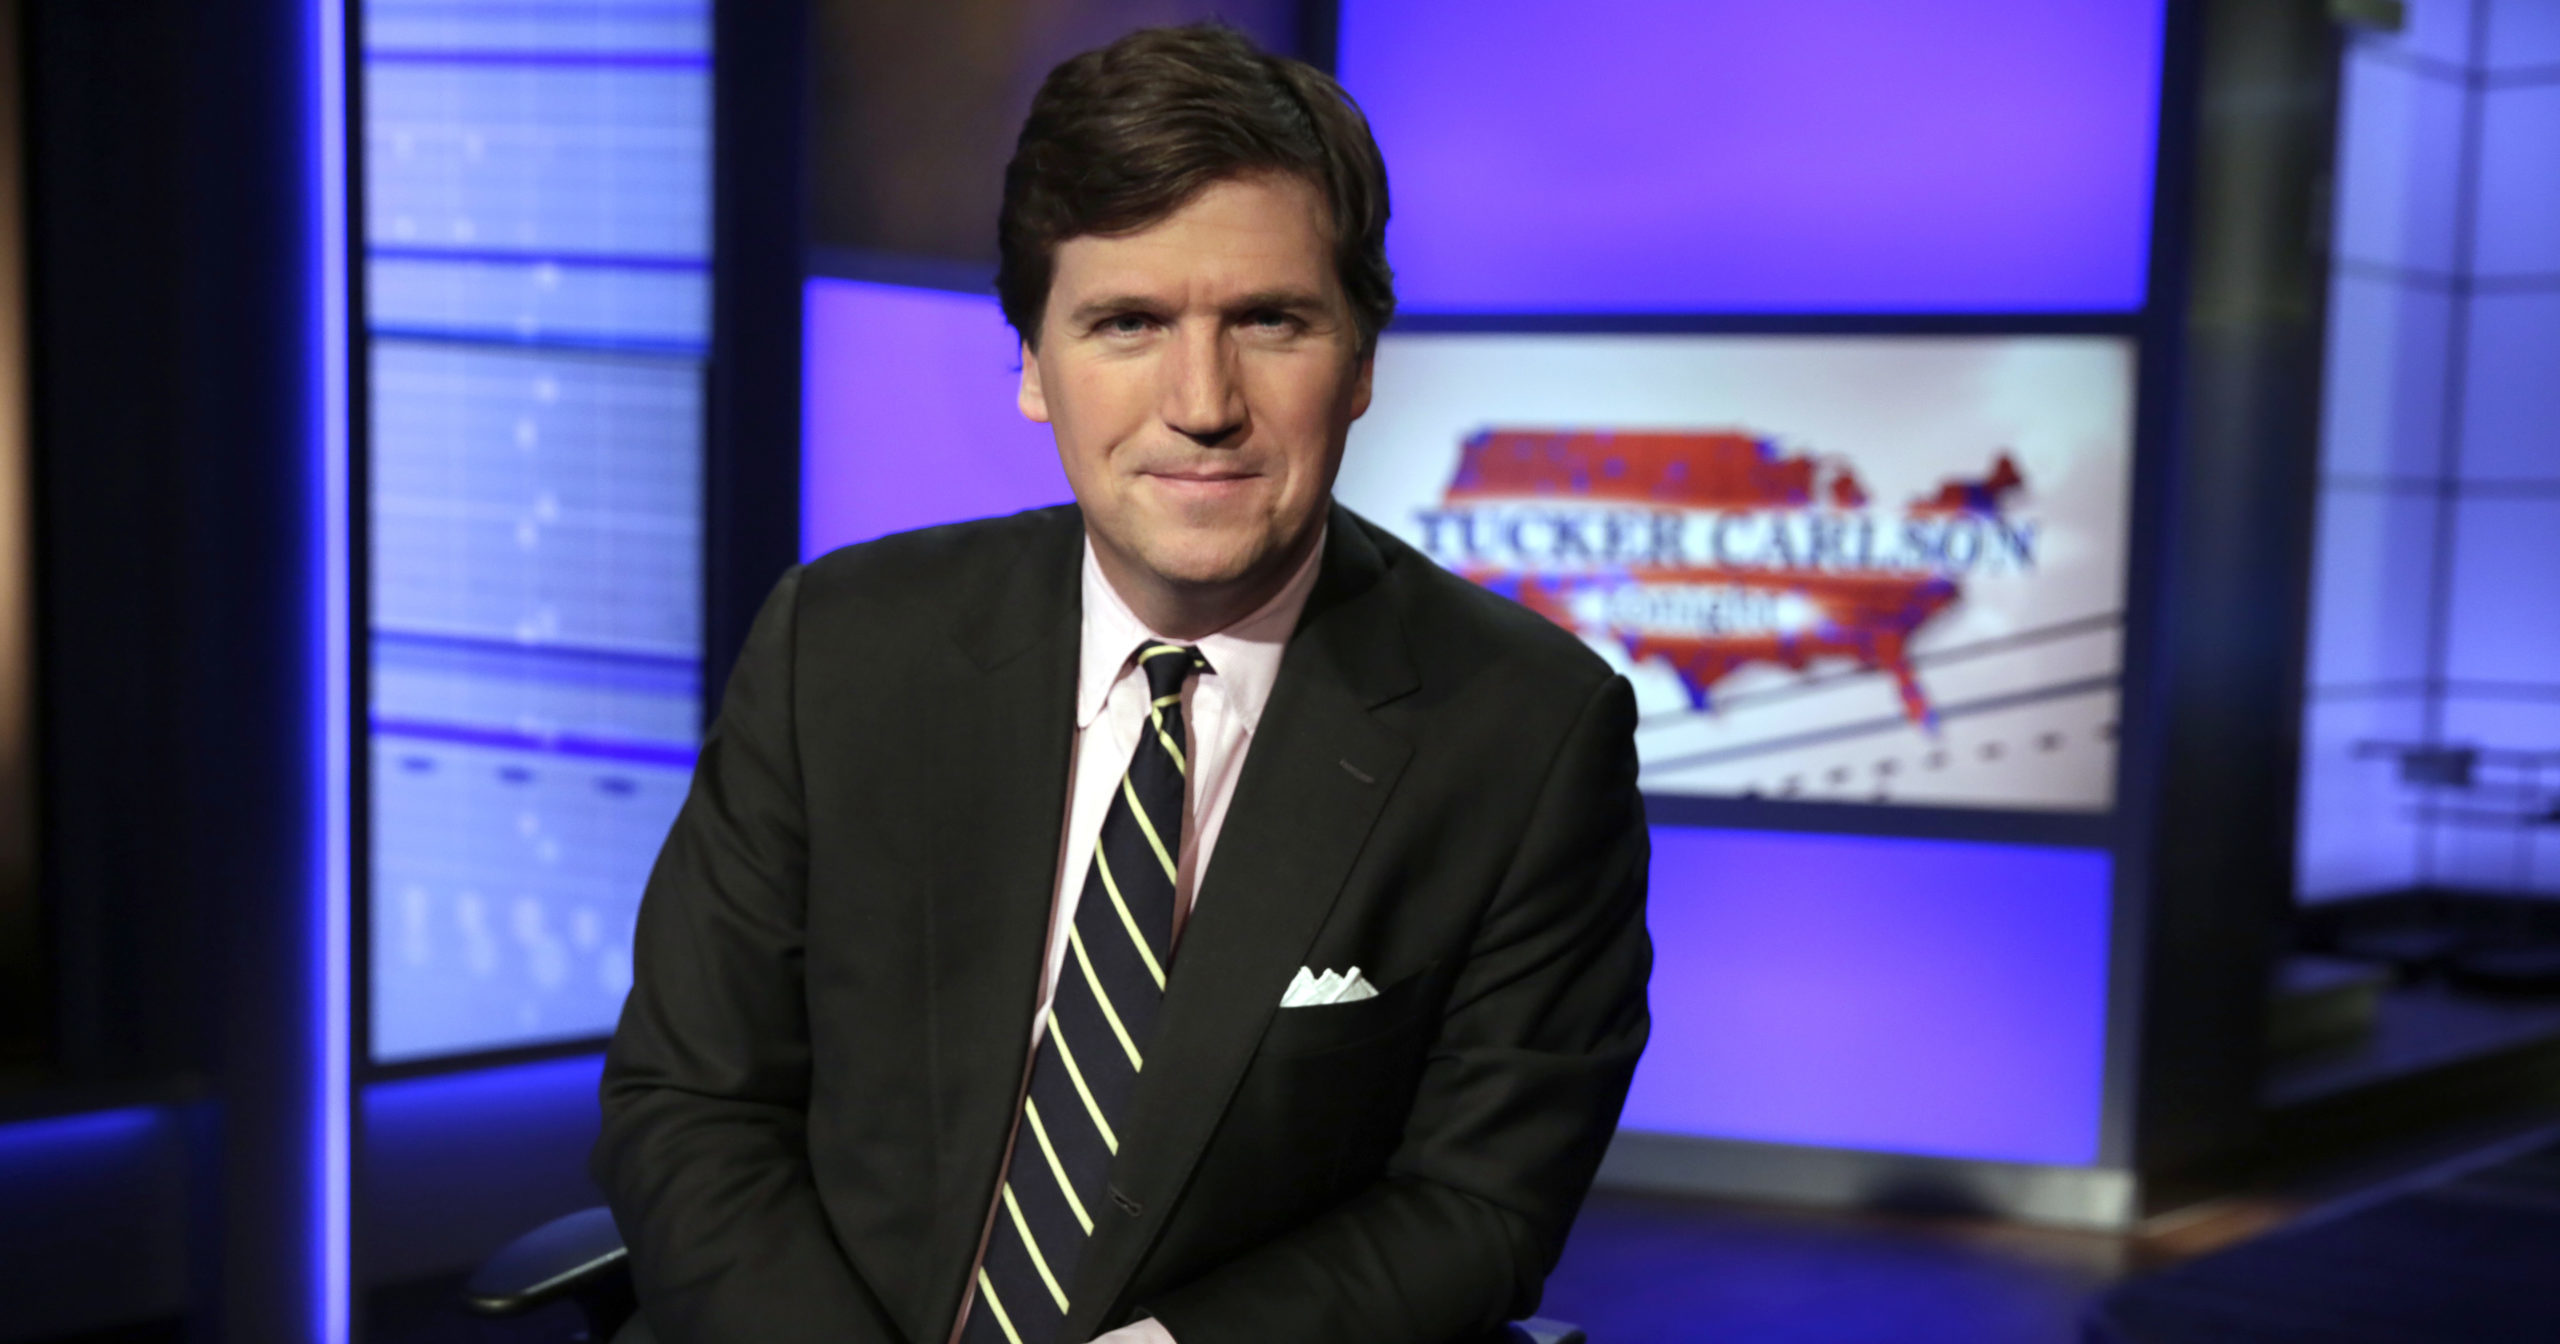 Tucker Carlson, host of "Tucker Carlson Tonight," poses in a Fox News studio on March 2, 2017, in New York.